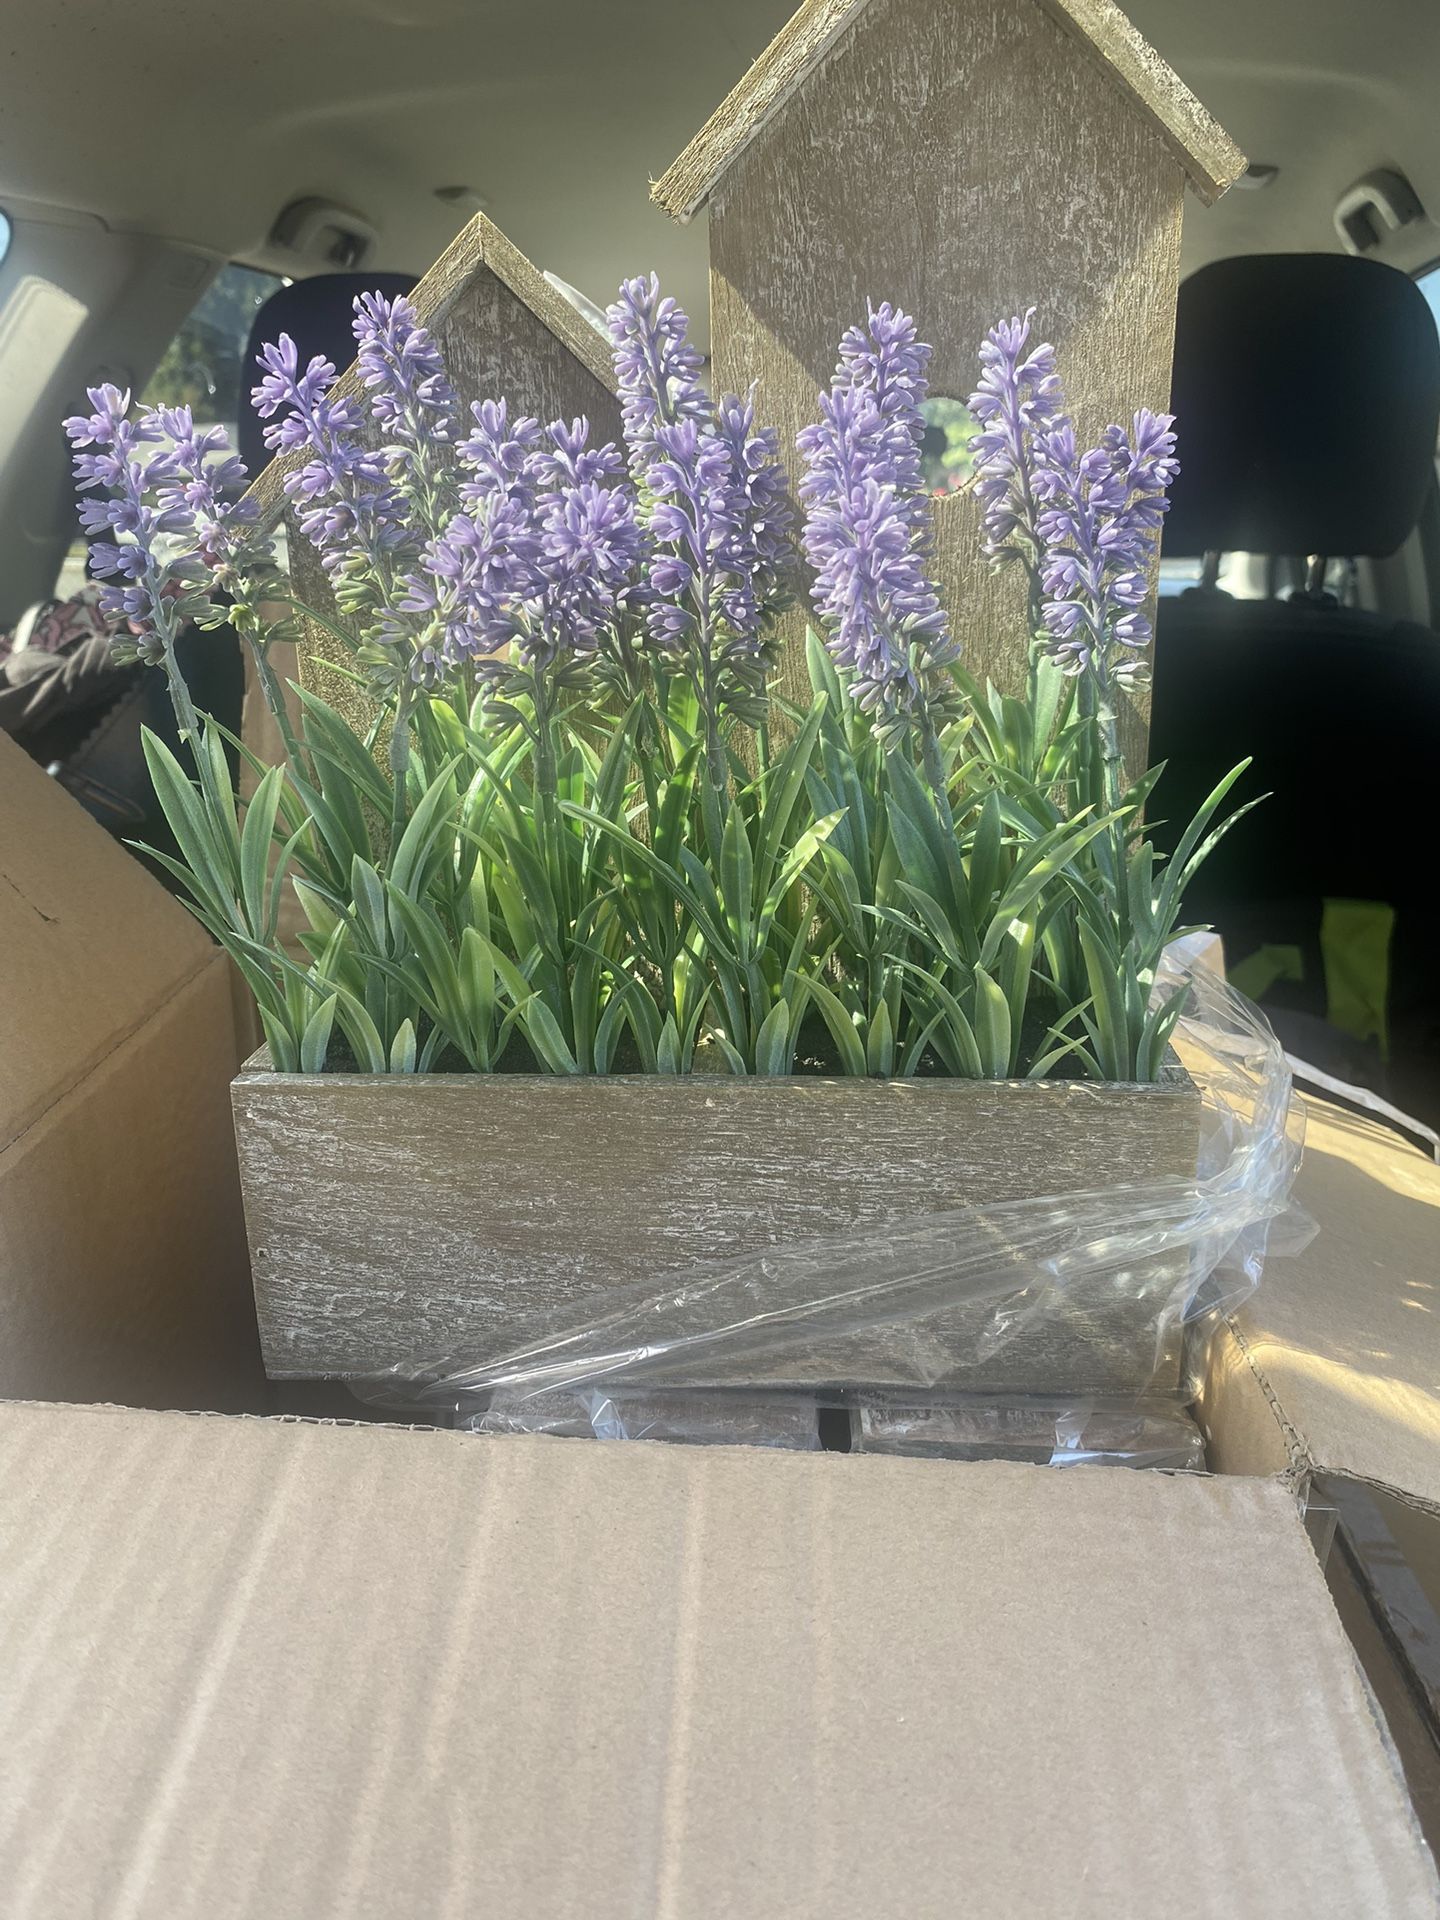 Lavender Fake Flowers 